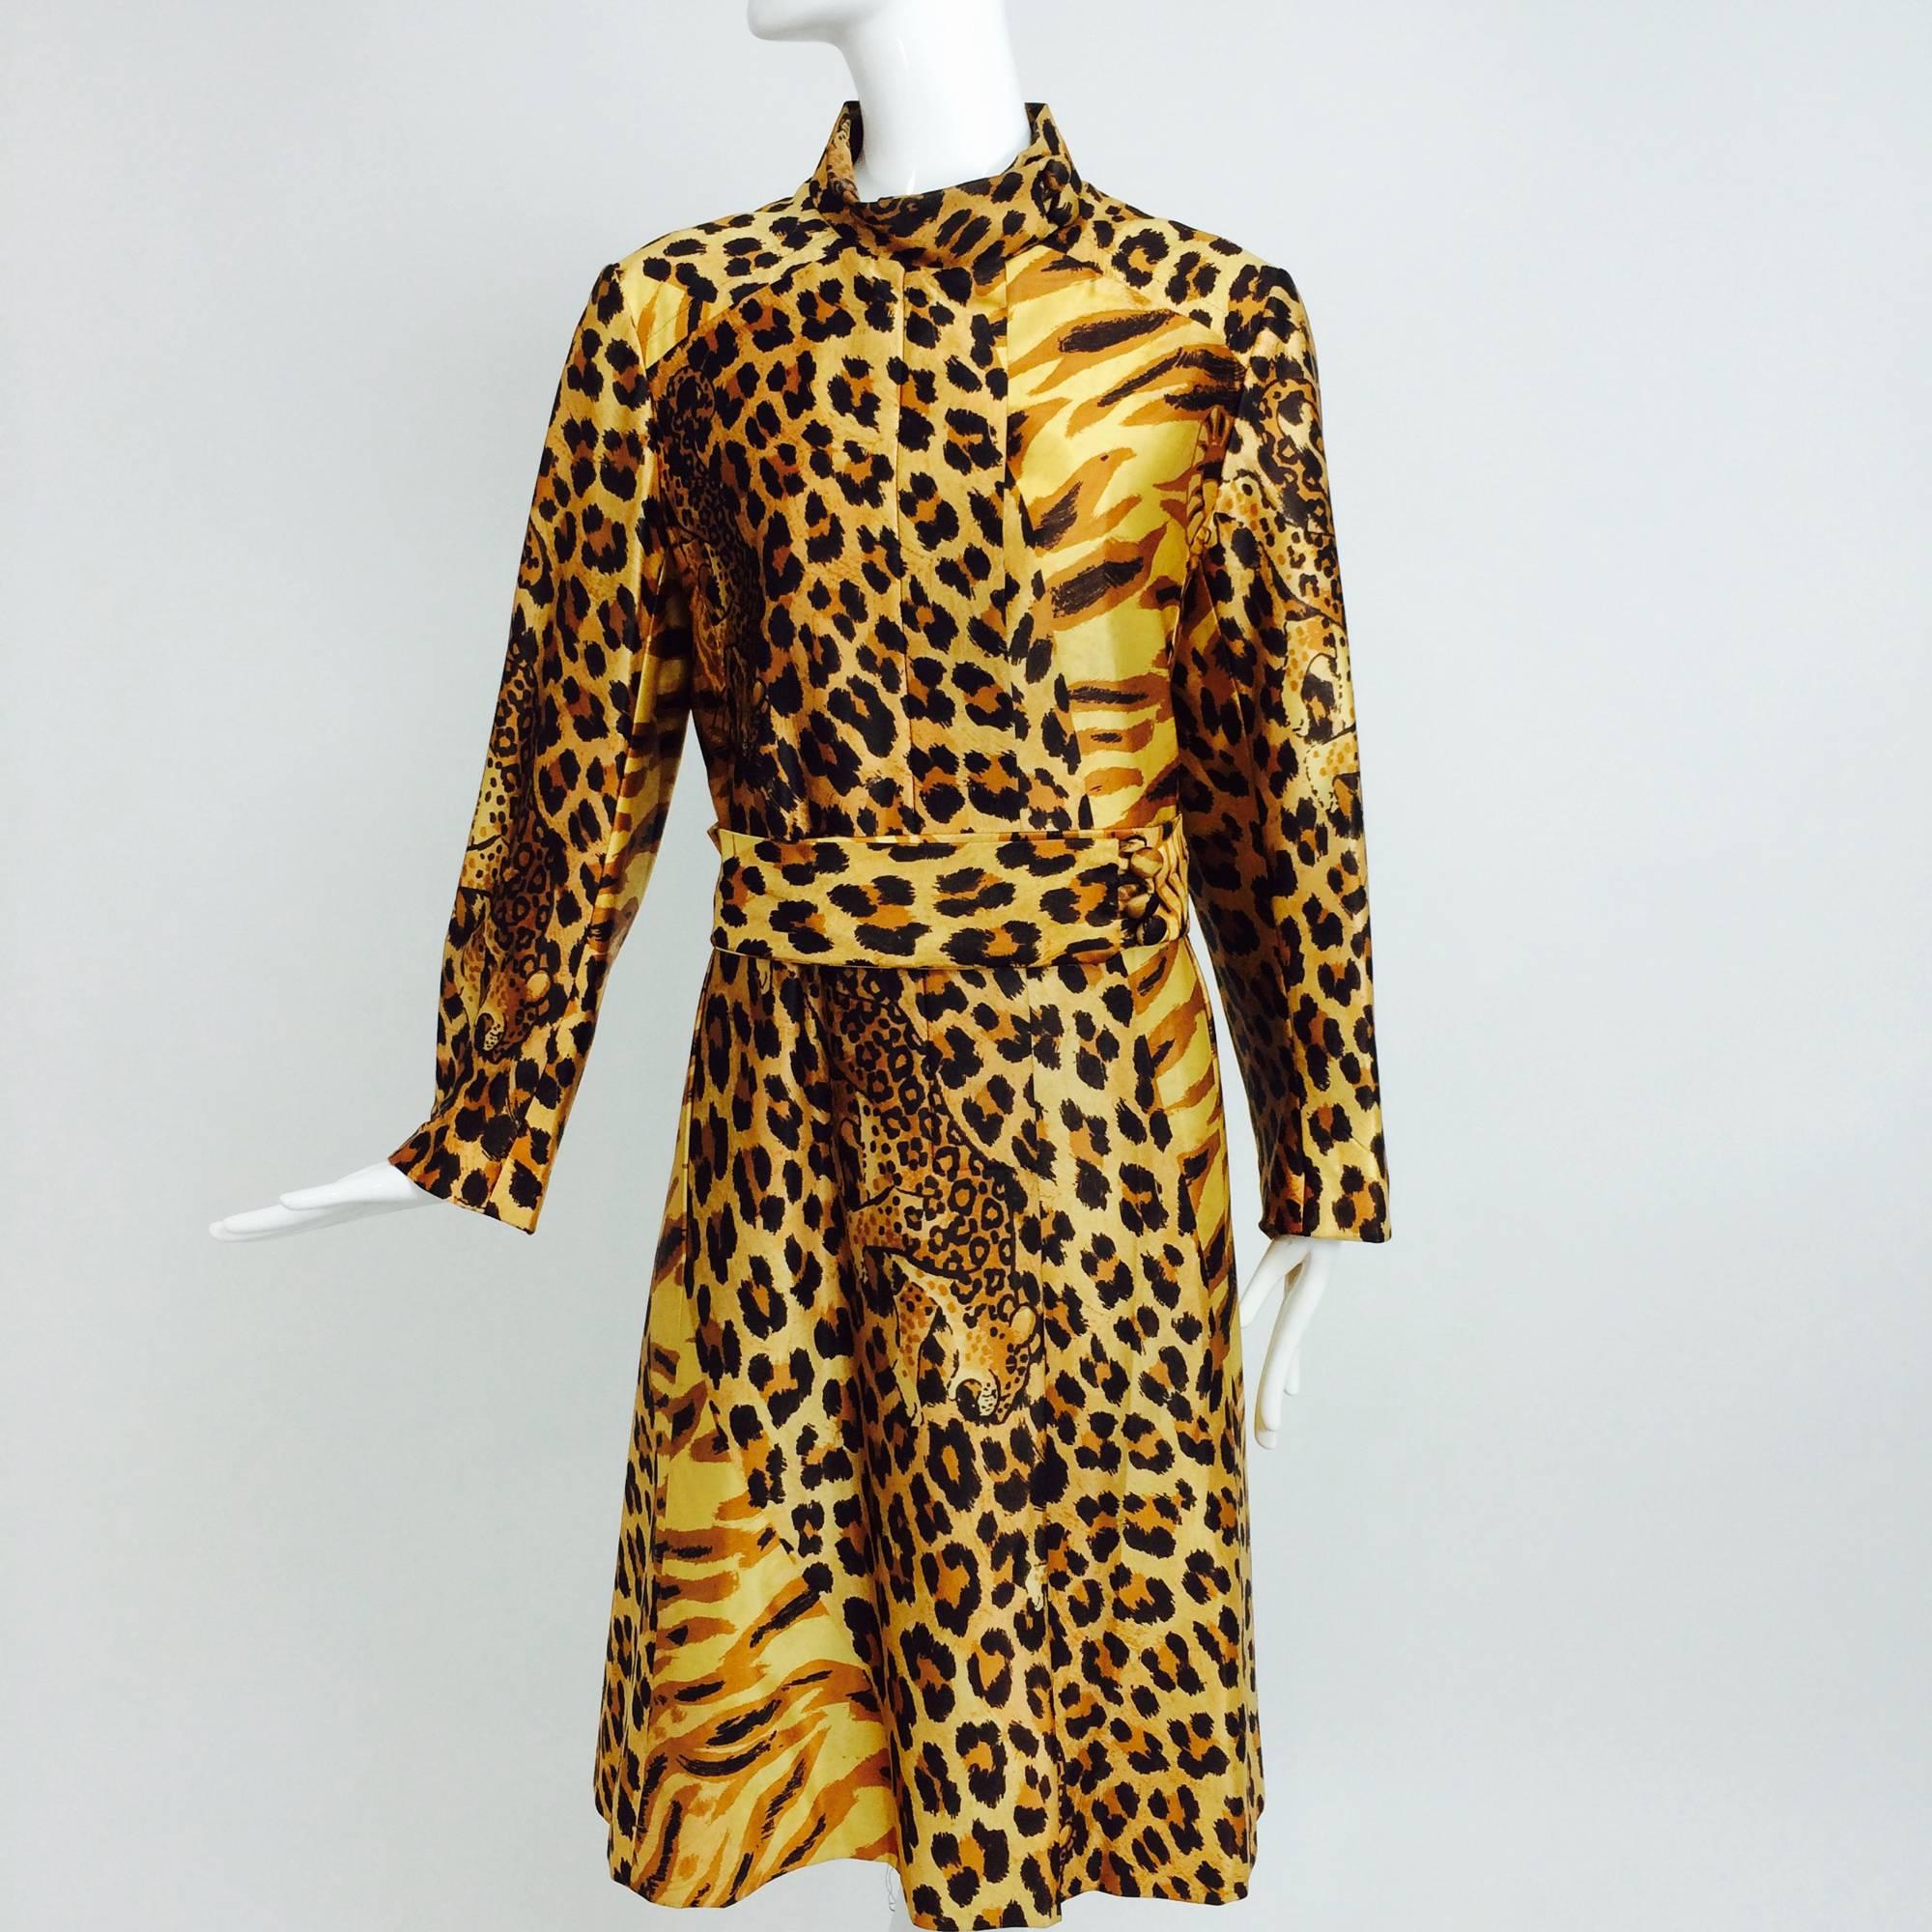 Vintage Main Street leopard print rain coat 1970s 2